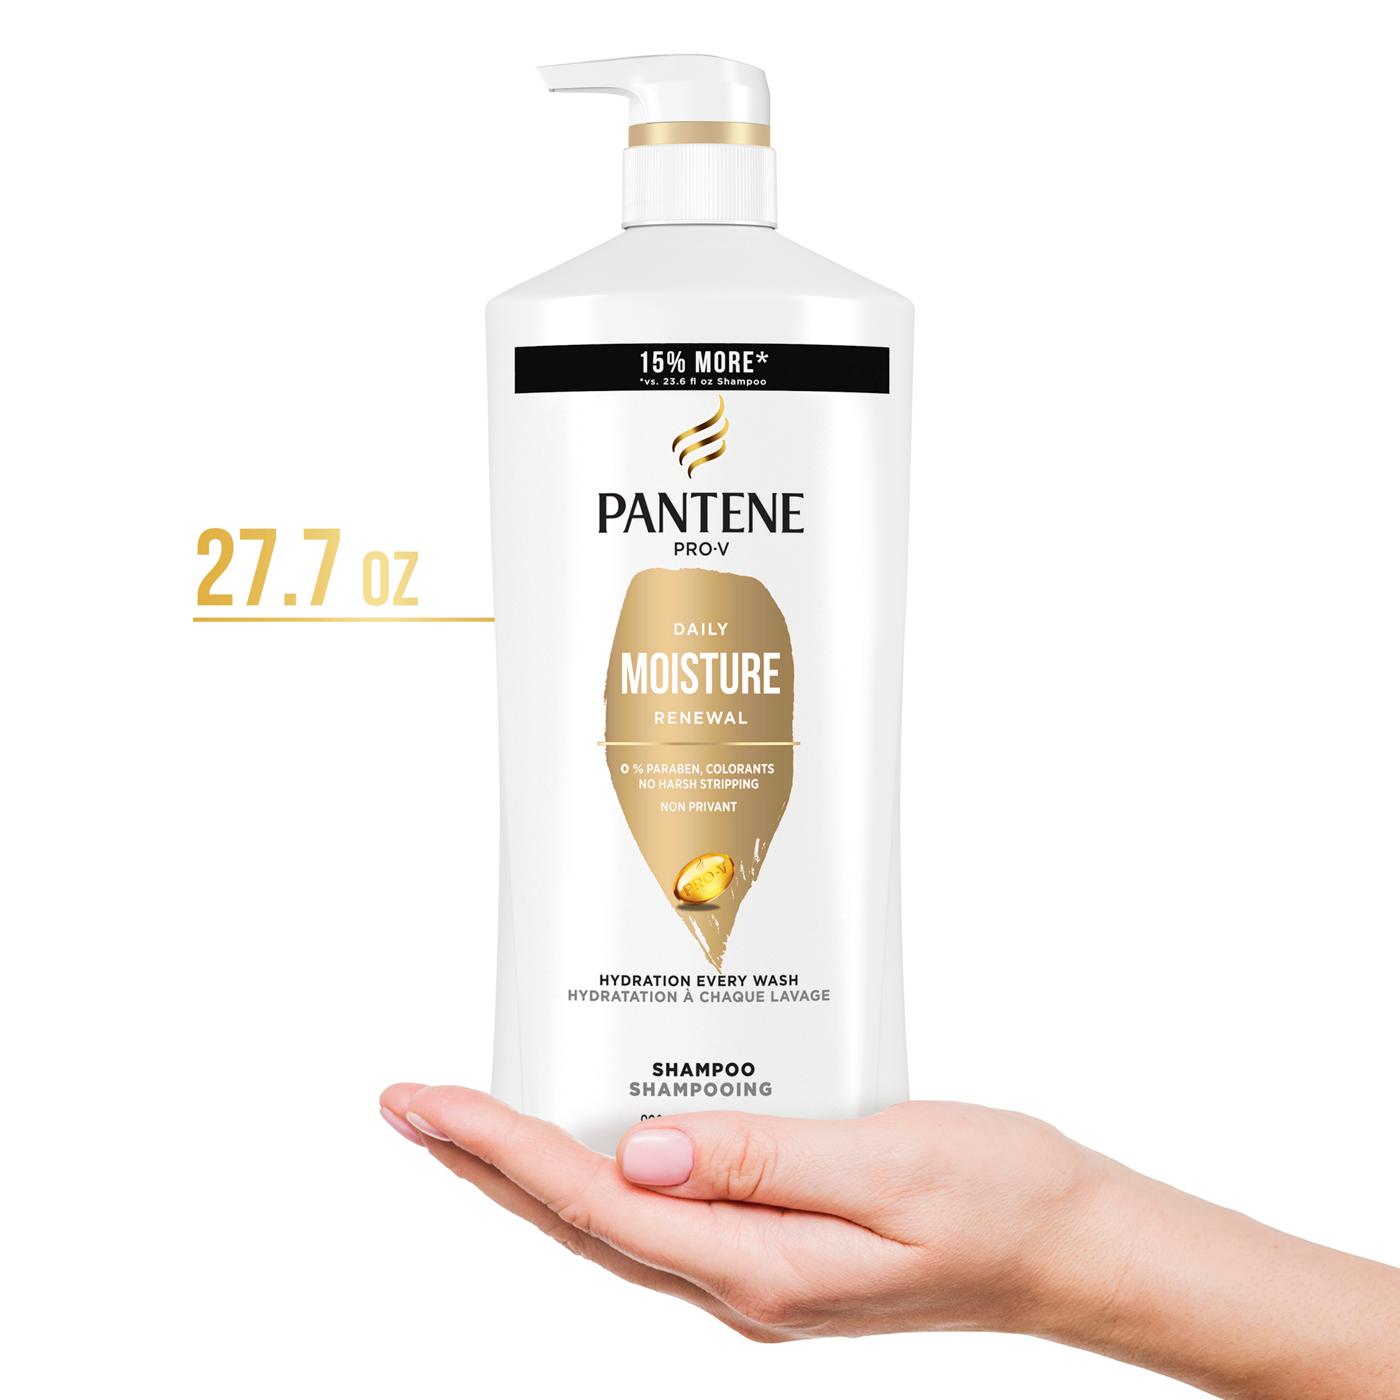 Pantene Pro-V Daily Moisture Renewal Shampoo; image 9 of 9